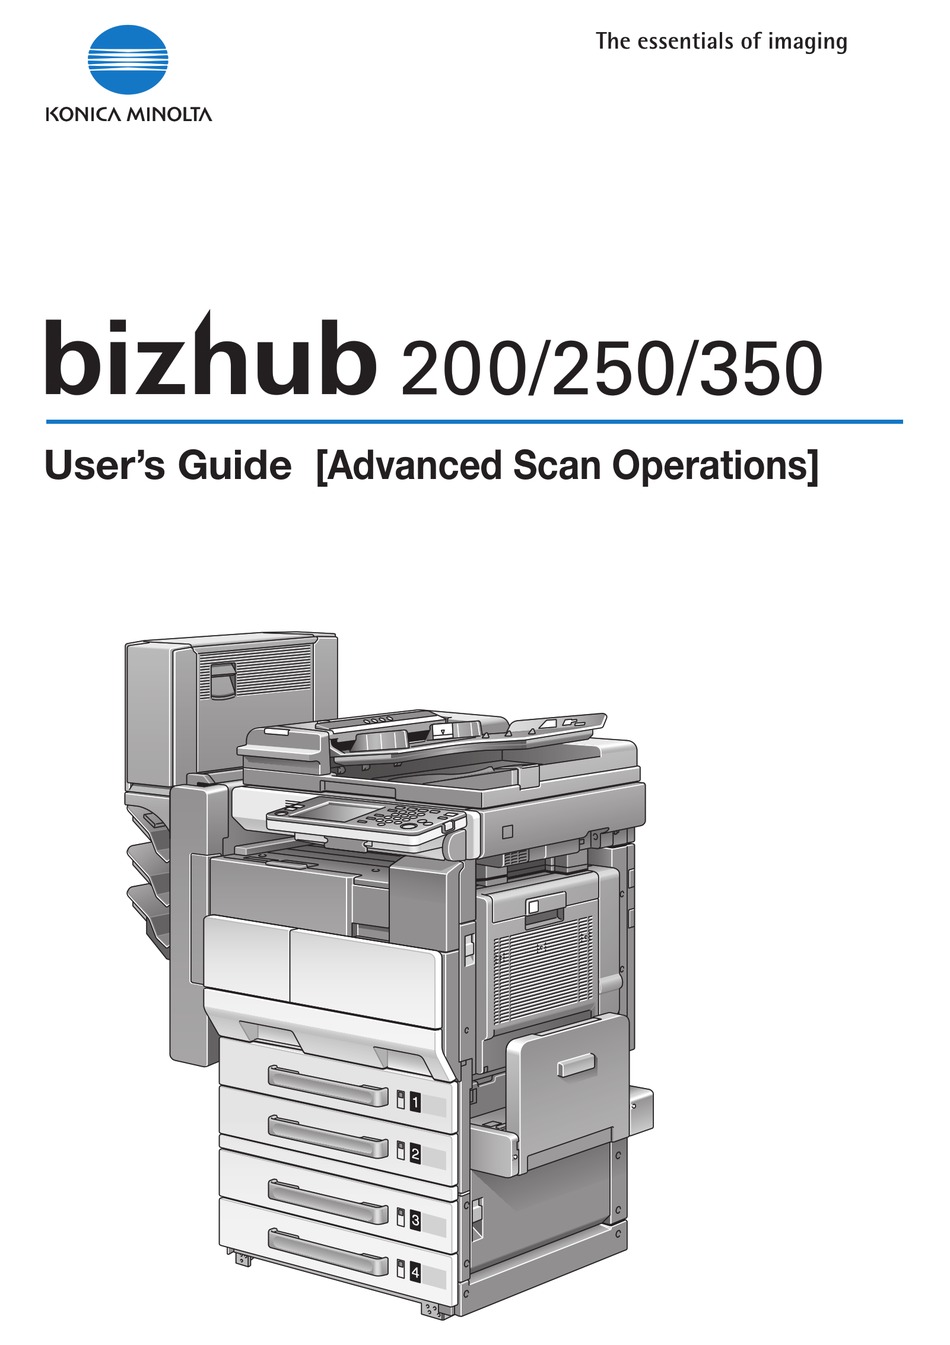 Bizhub 362 Scan Driver - Support Copier Drivers Konica ...